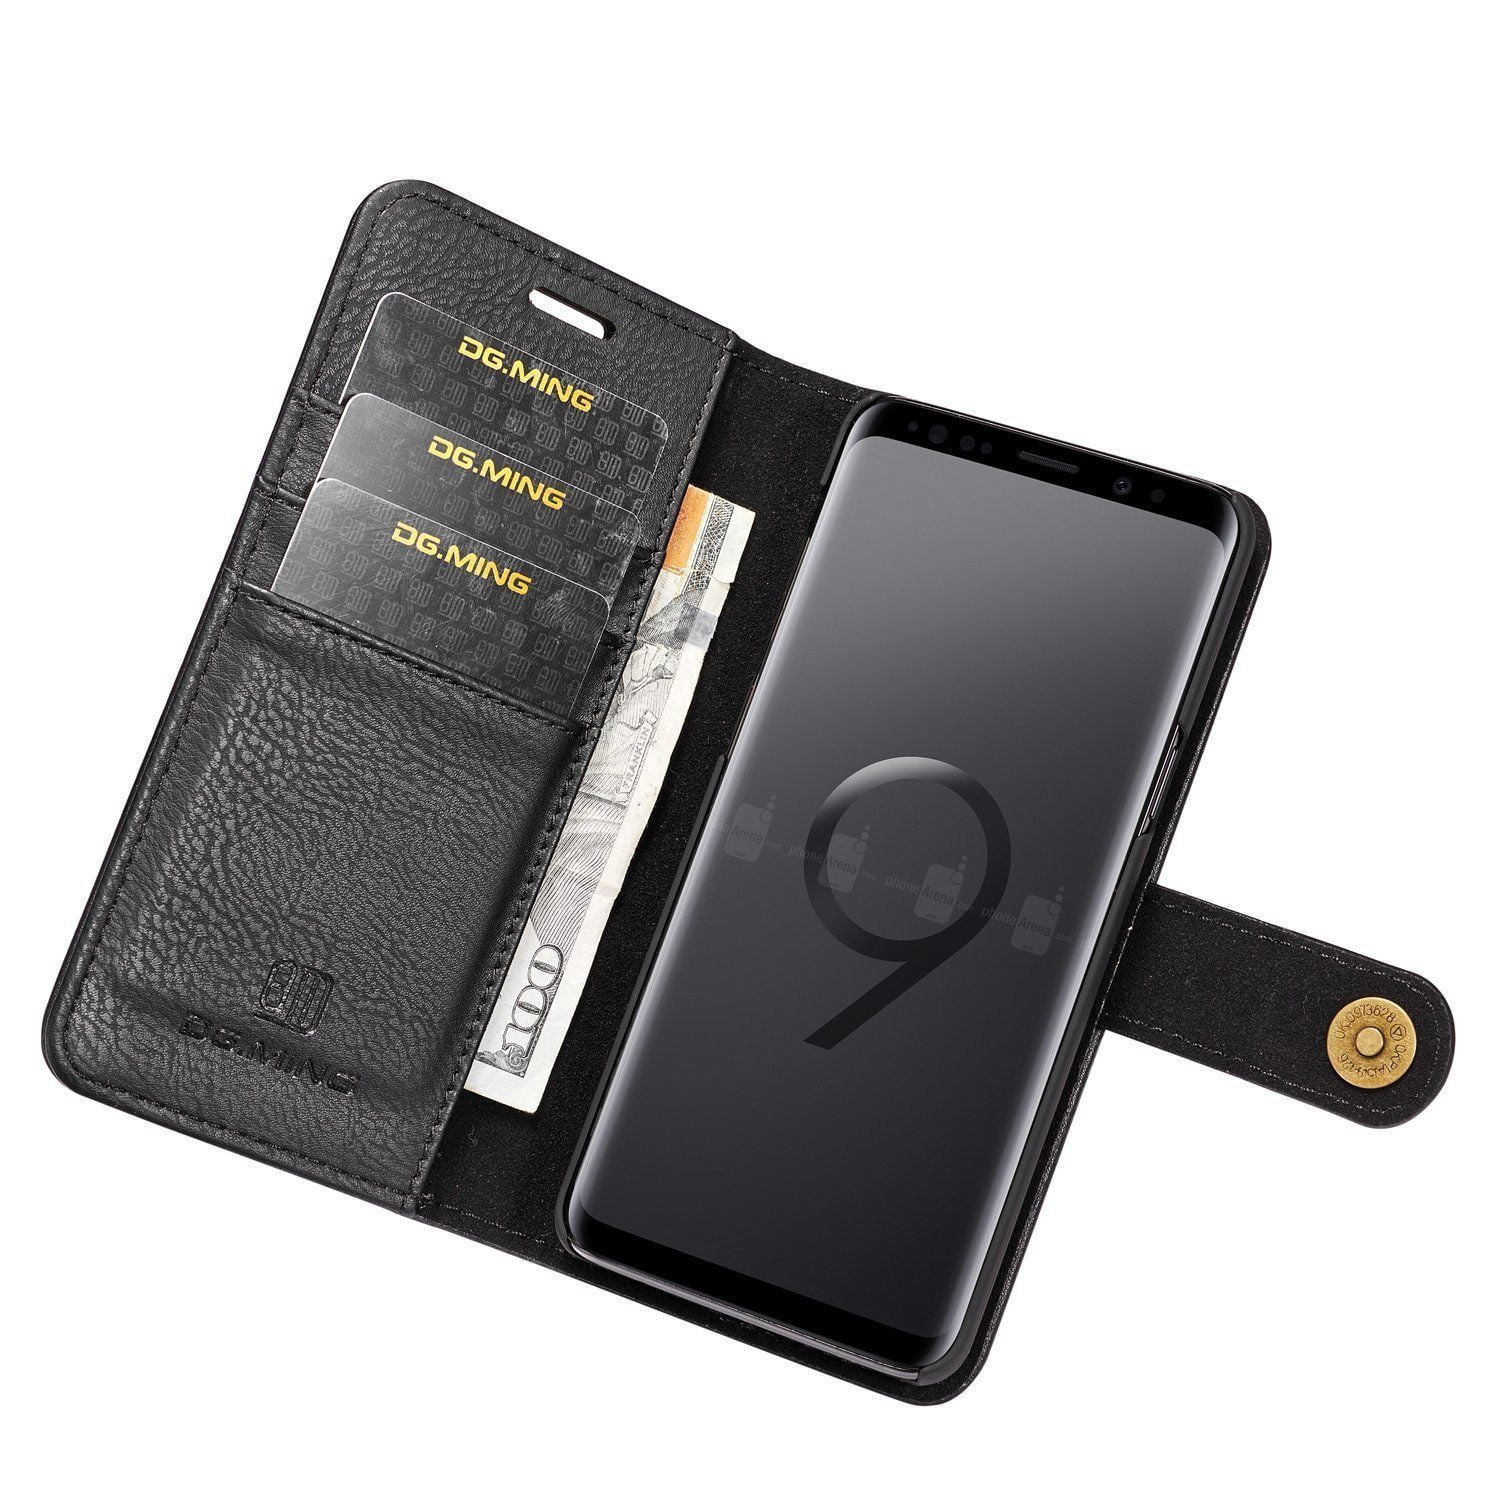 CaseMe Samsung Galaxy S9 Detachable 2 in 1 Magnet Wallet Case Brown